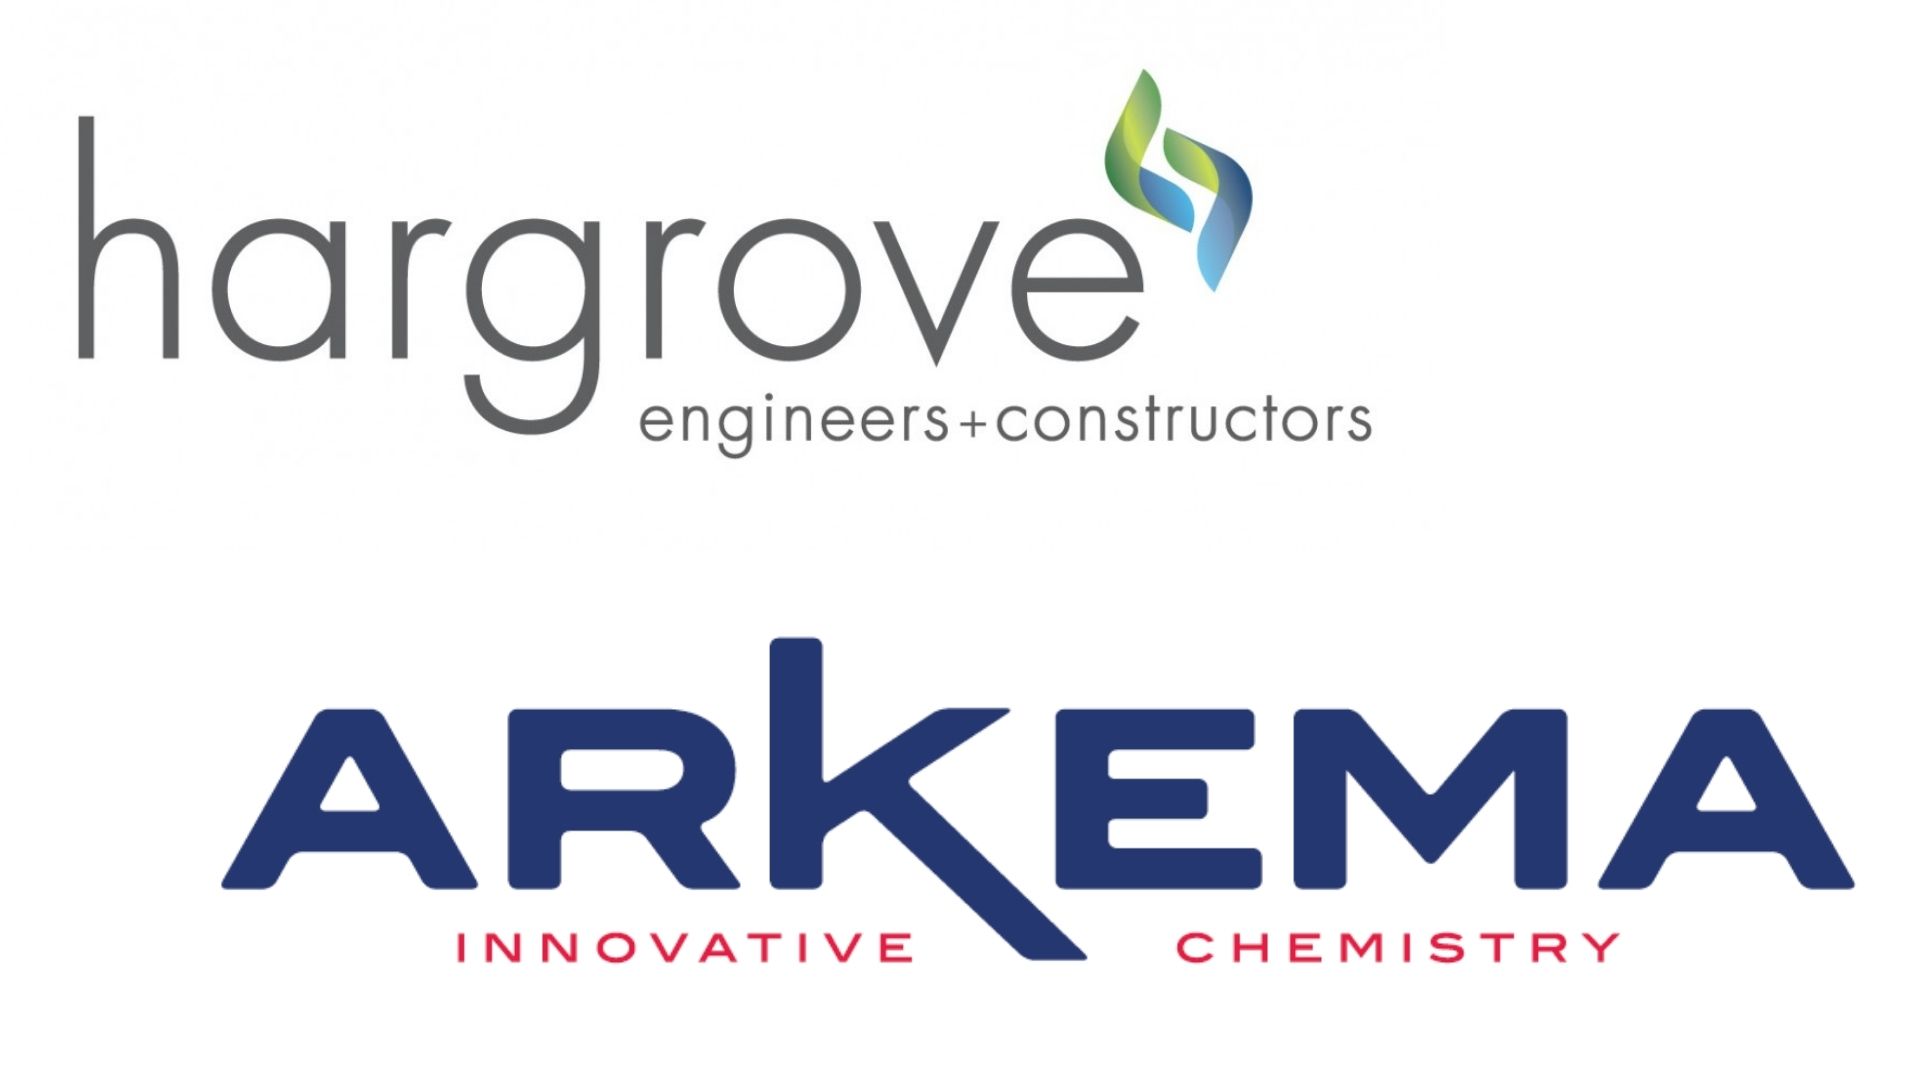 Hargrove and Arkema logos